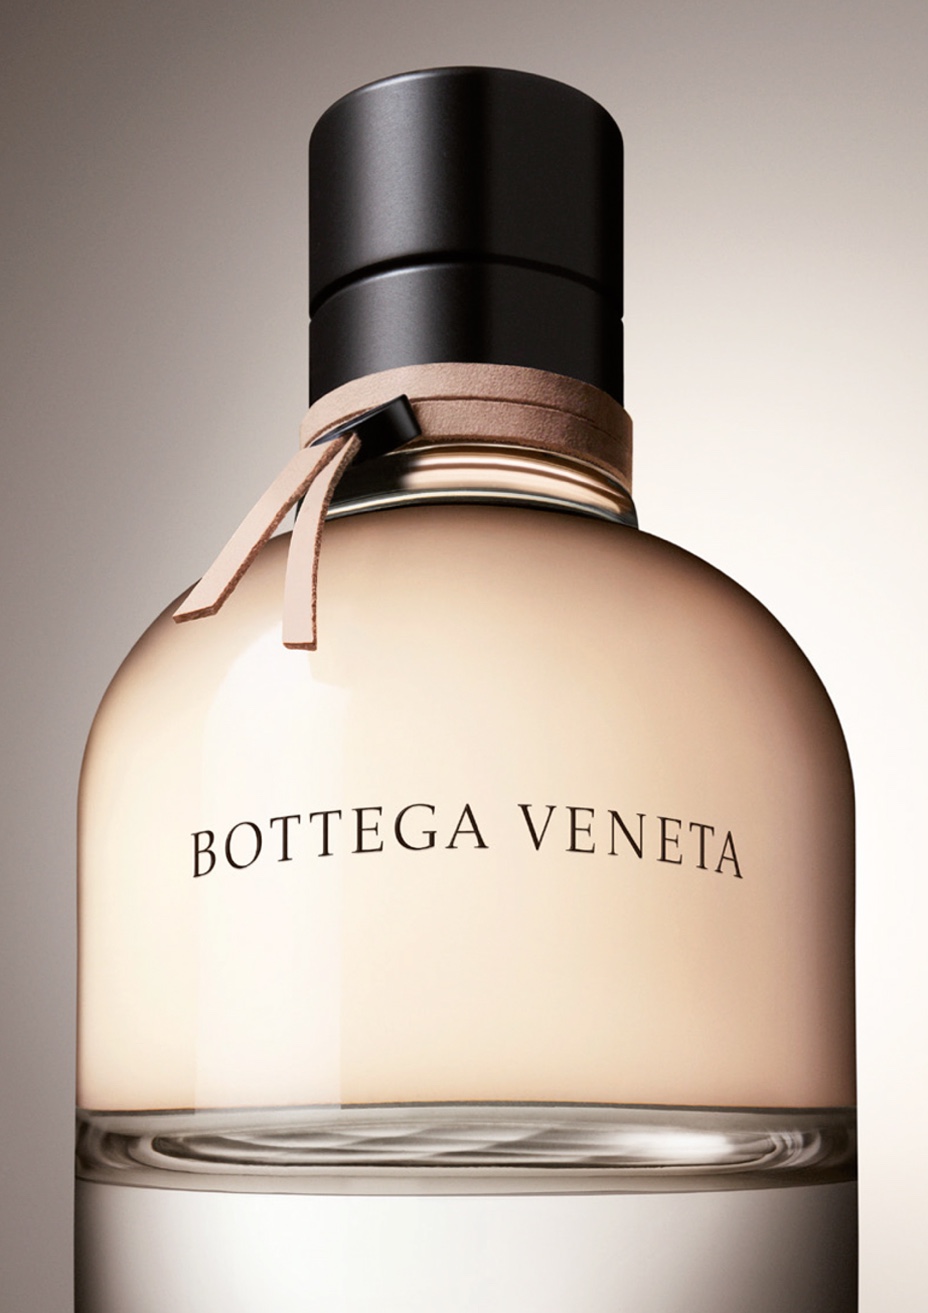 Bottega Veneta image